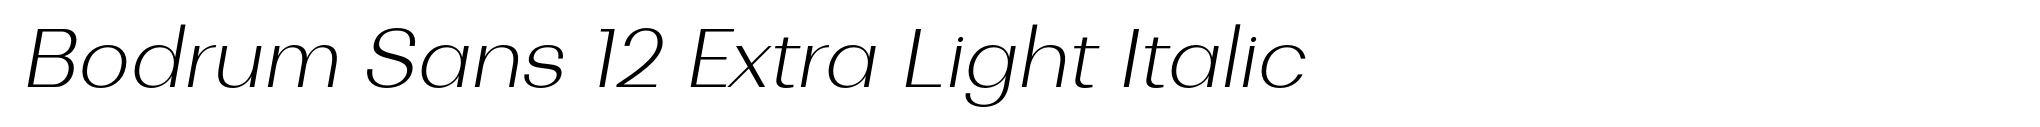 Bodrum Sans 12 Extra Light Italic image